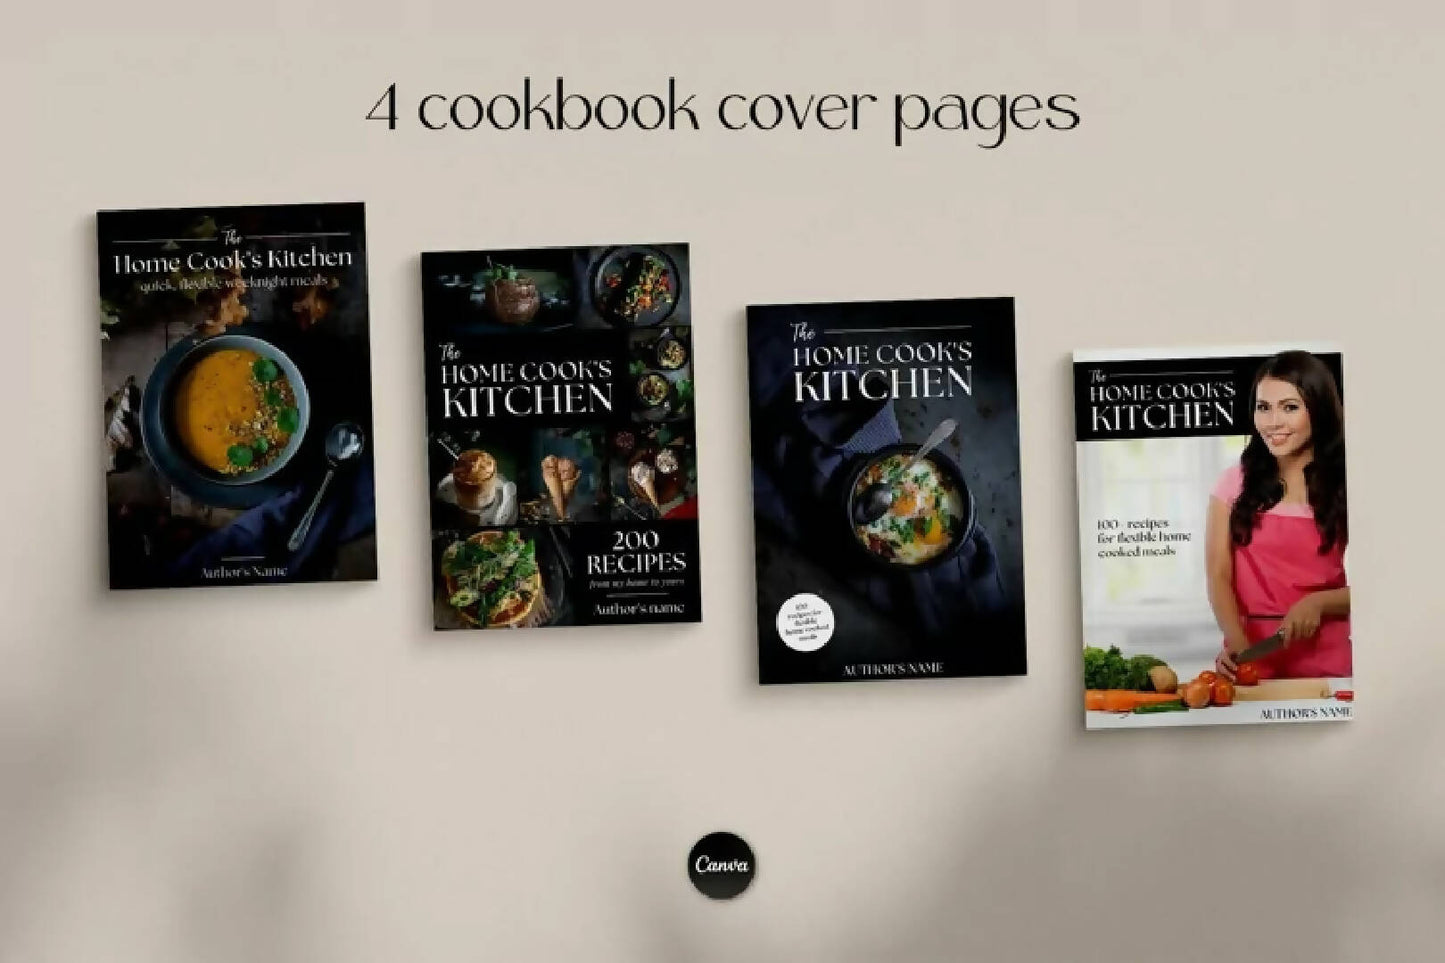 eBook Canva Cookbook Template - Dark Moody